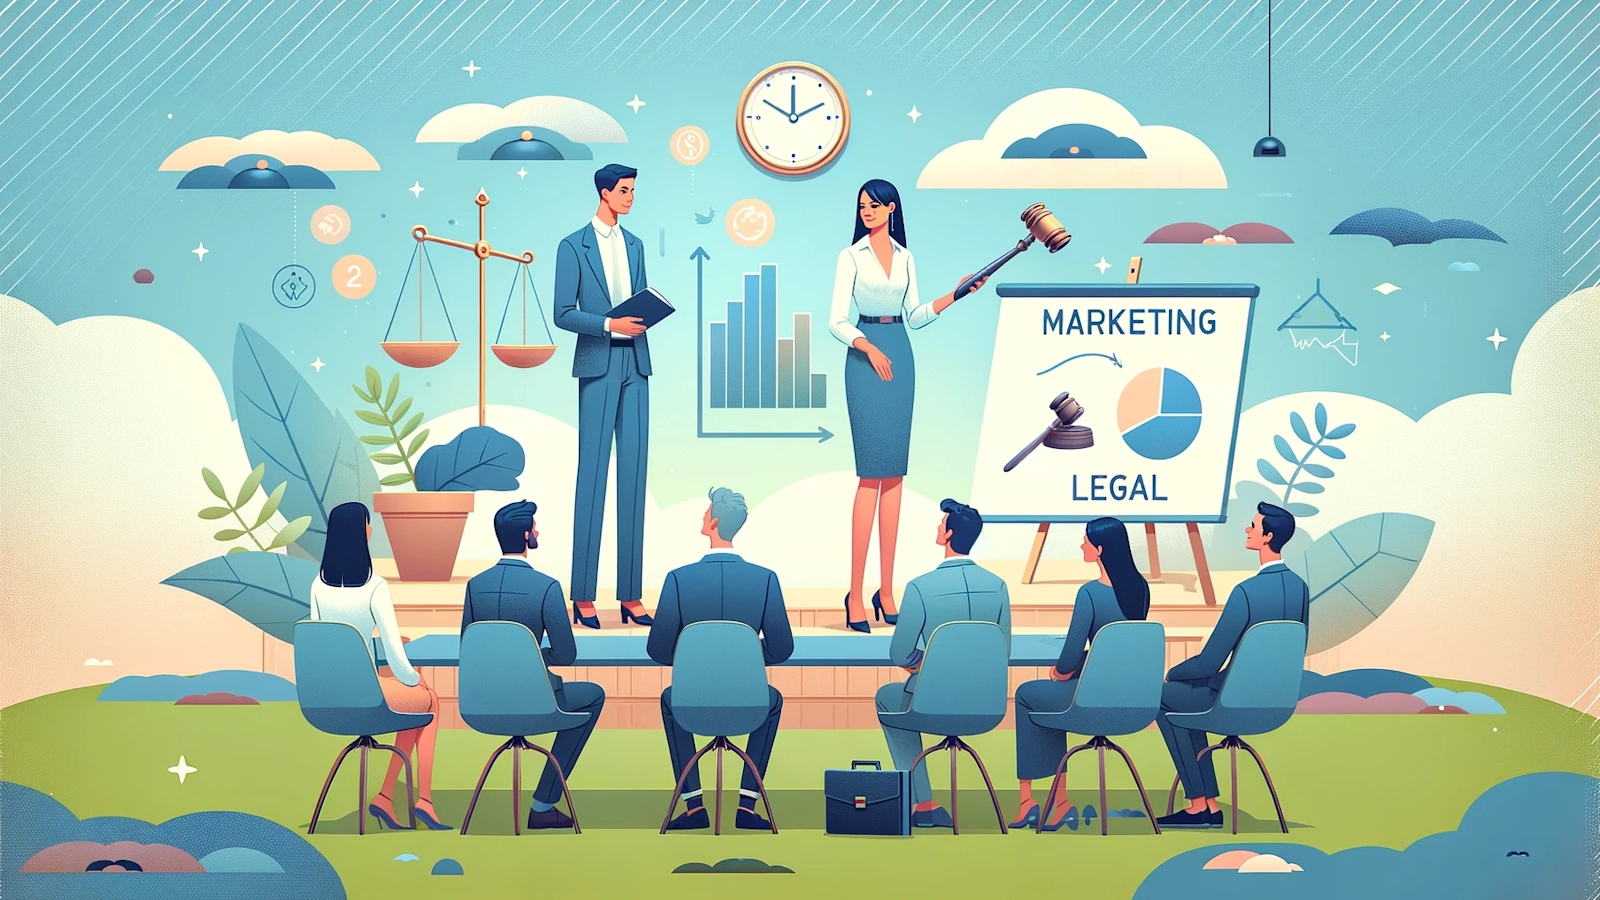 Legal Marketing - Web1Media Digital Marketing Experts